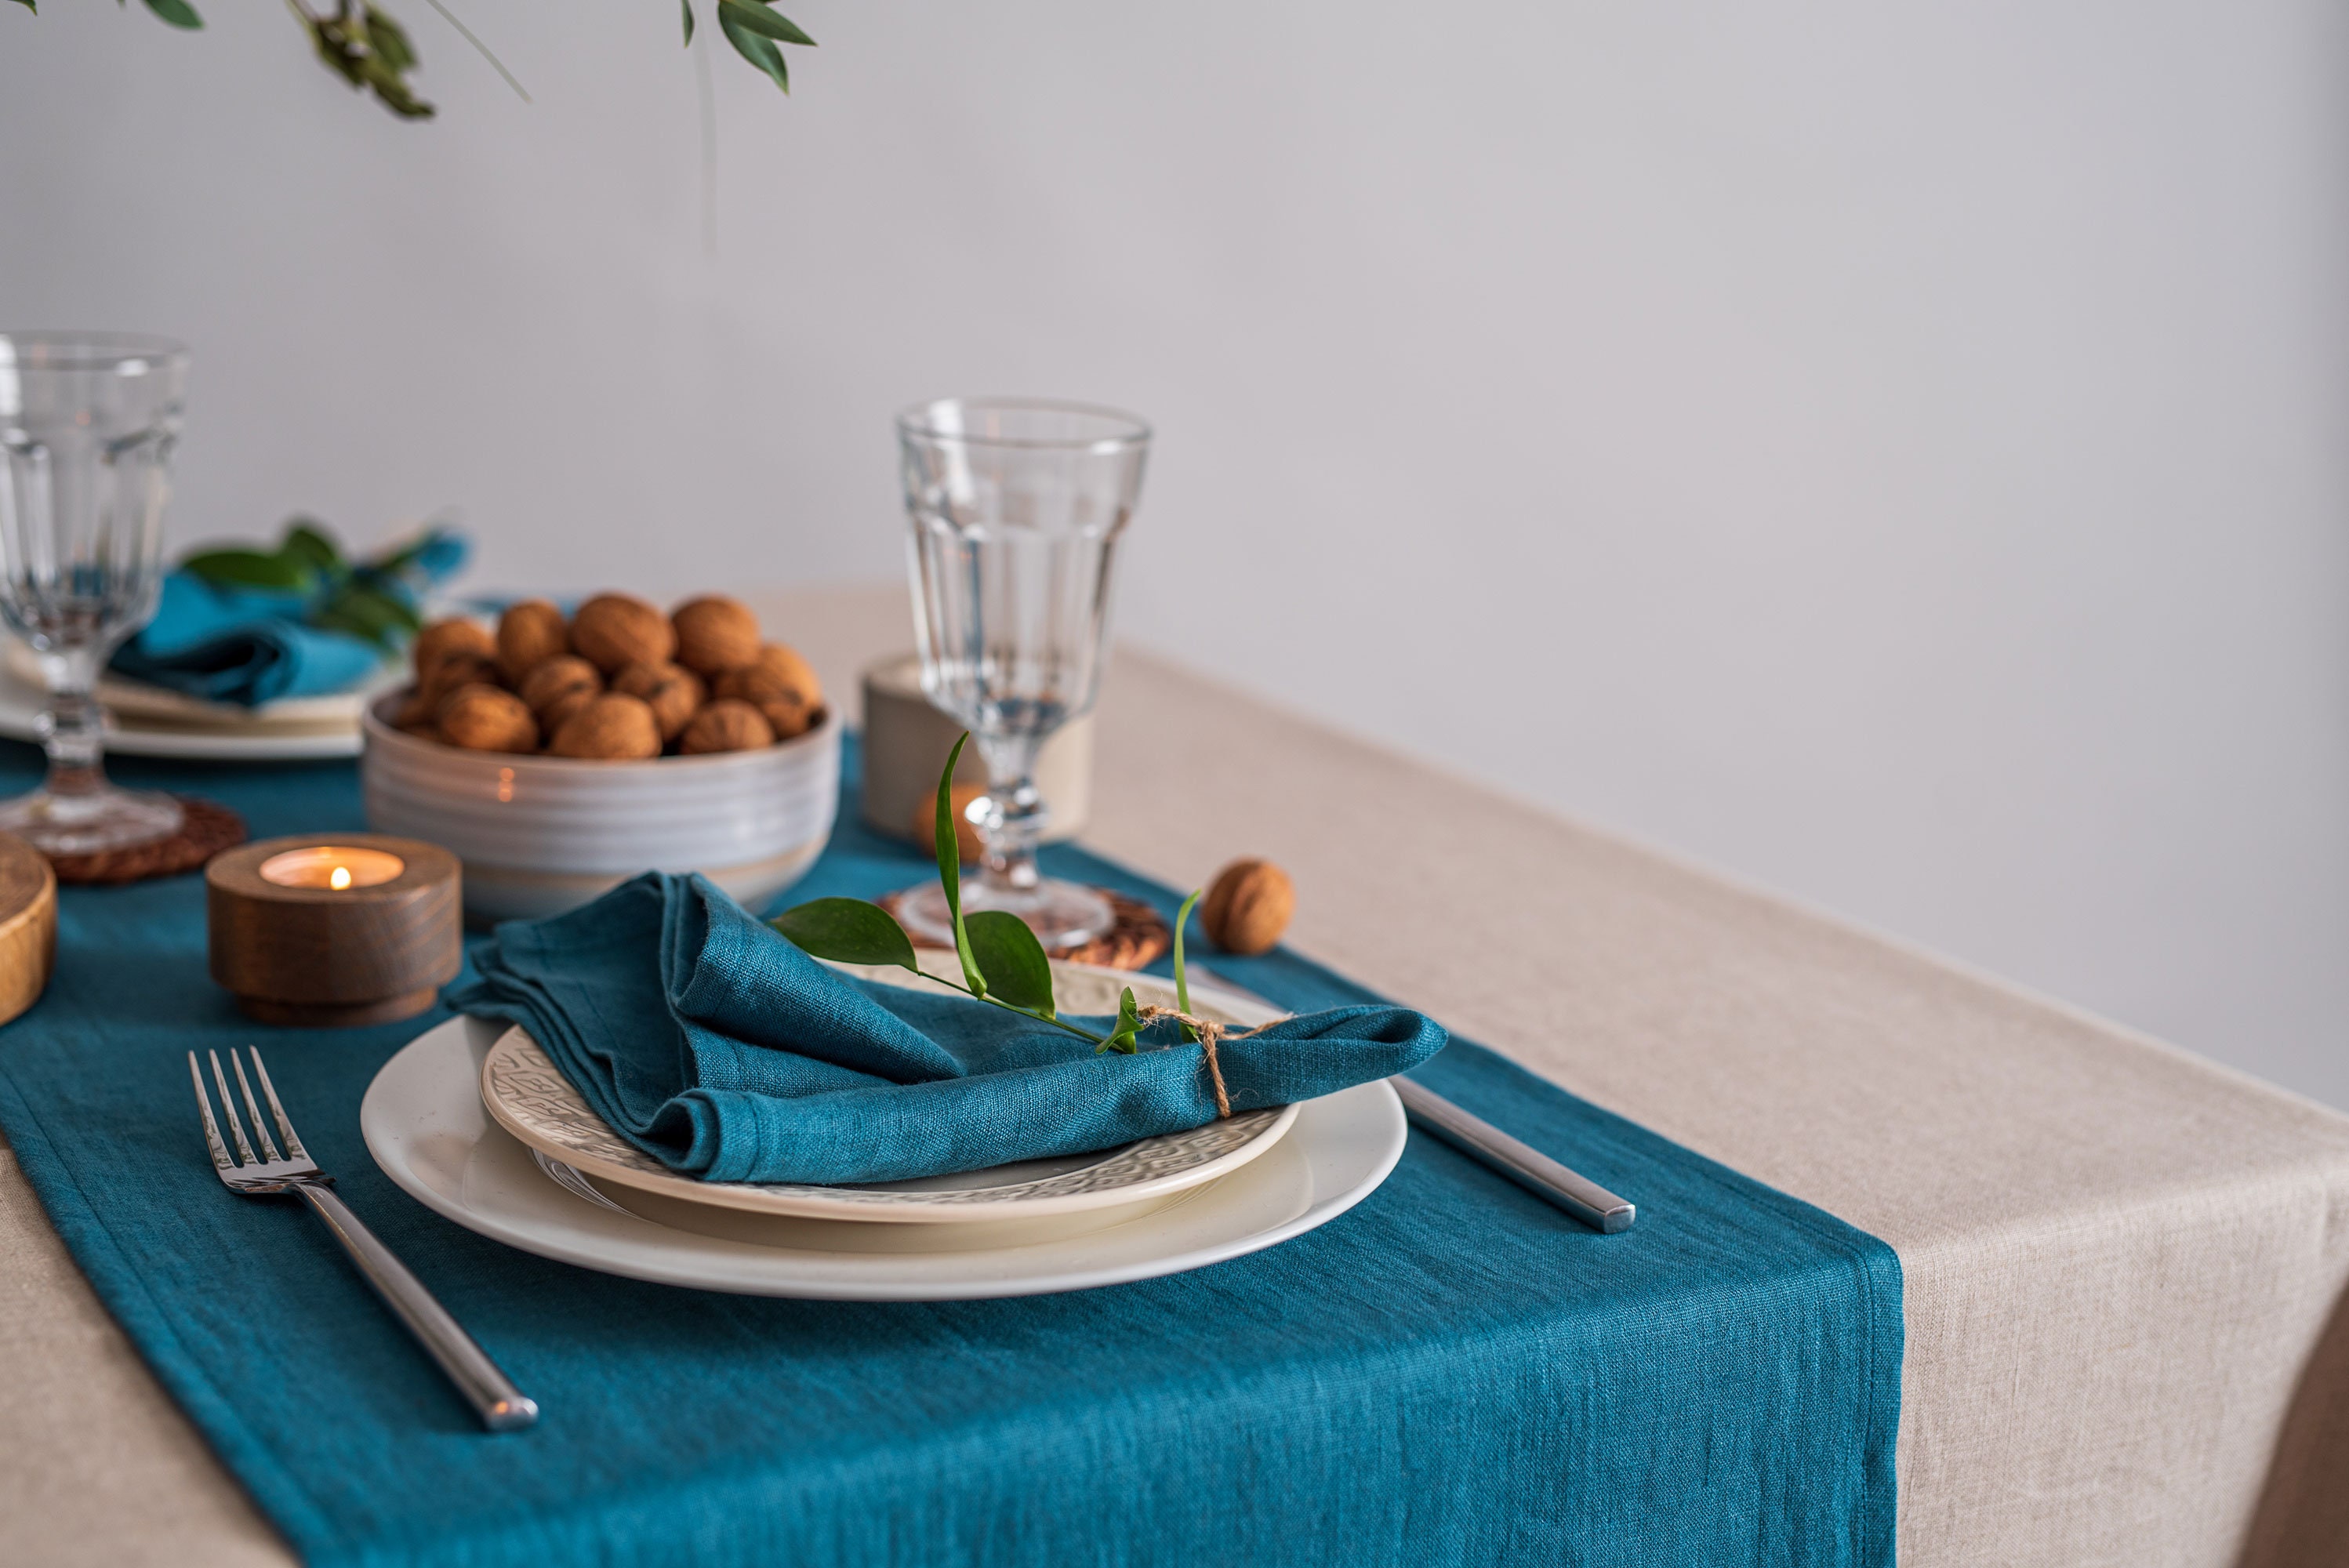 Blue Linen Napkins With Silver Wedding Party Napkins Metallic Easter Table  Decor Set 2, 4, 6, 8, 10, 12 Sparkle Vegan Dinner Cloth Napkins 